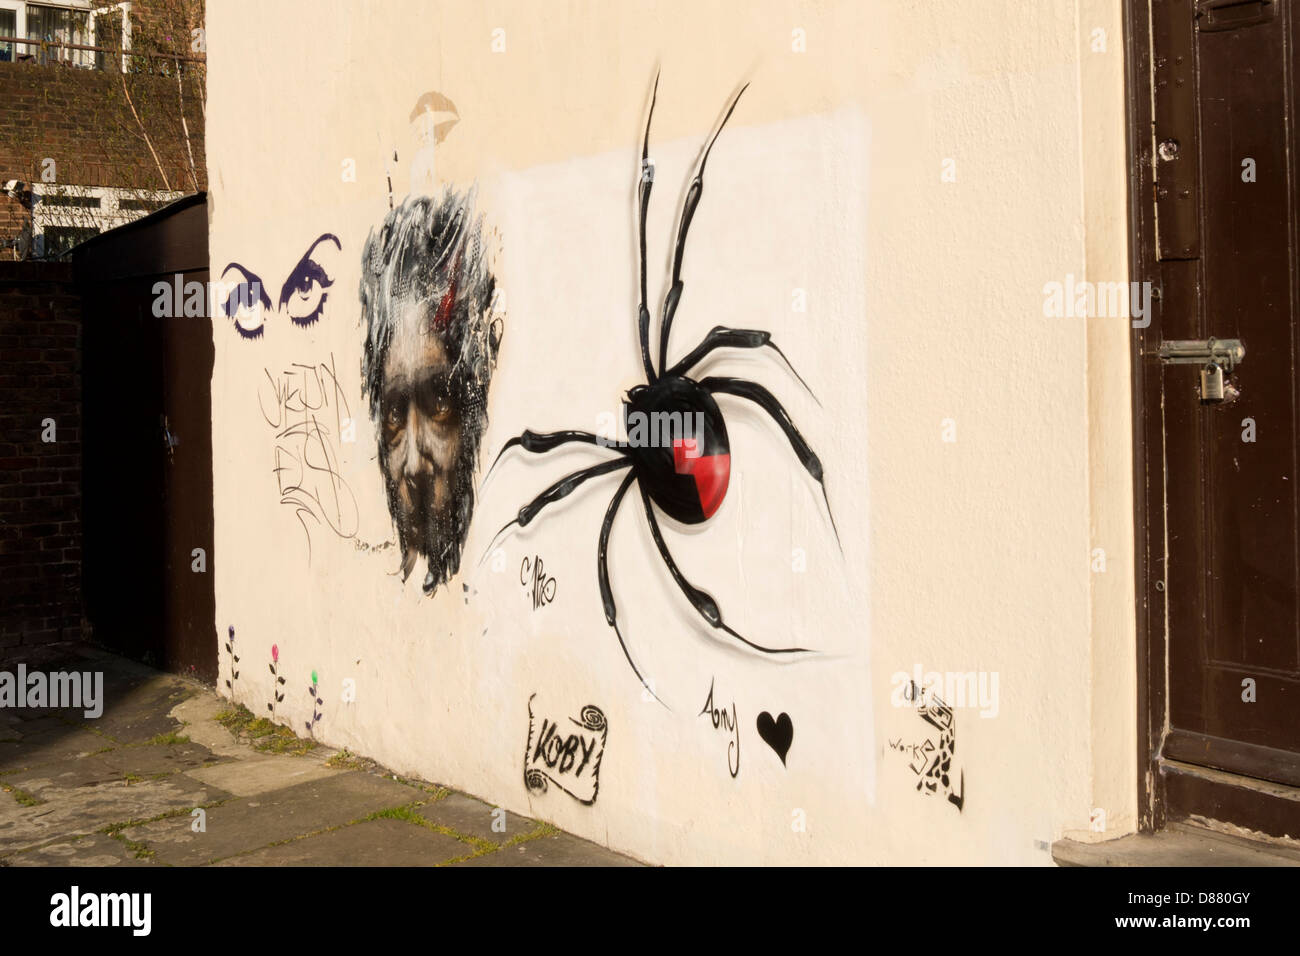 Street art graffiti in London Stock Photo